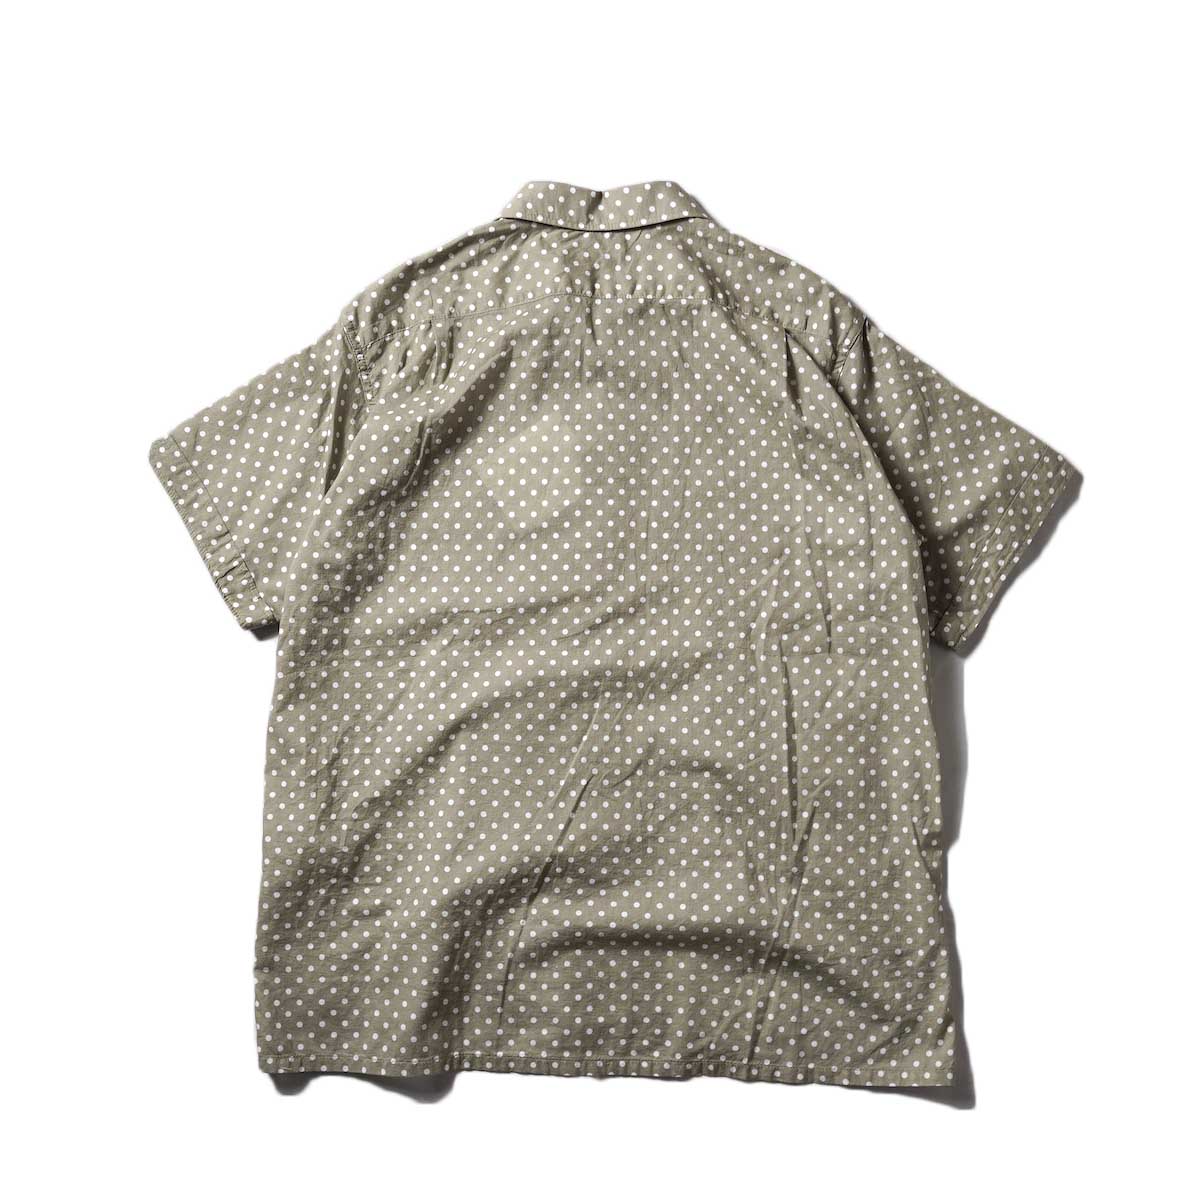 Engineered Garments / Camp Shirt - Polka Dot Cotton Lawn (Tan)背面